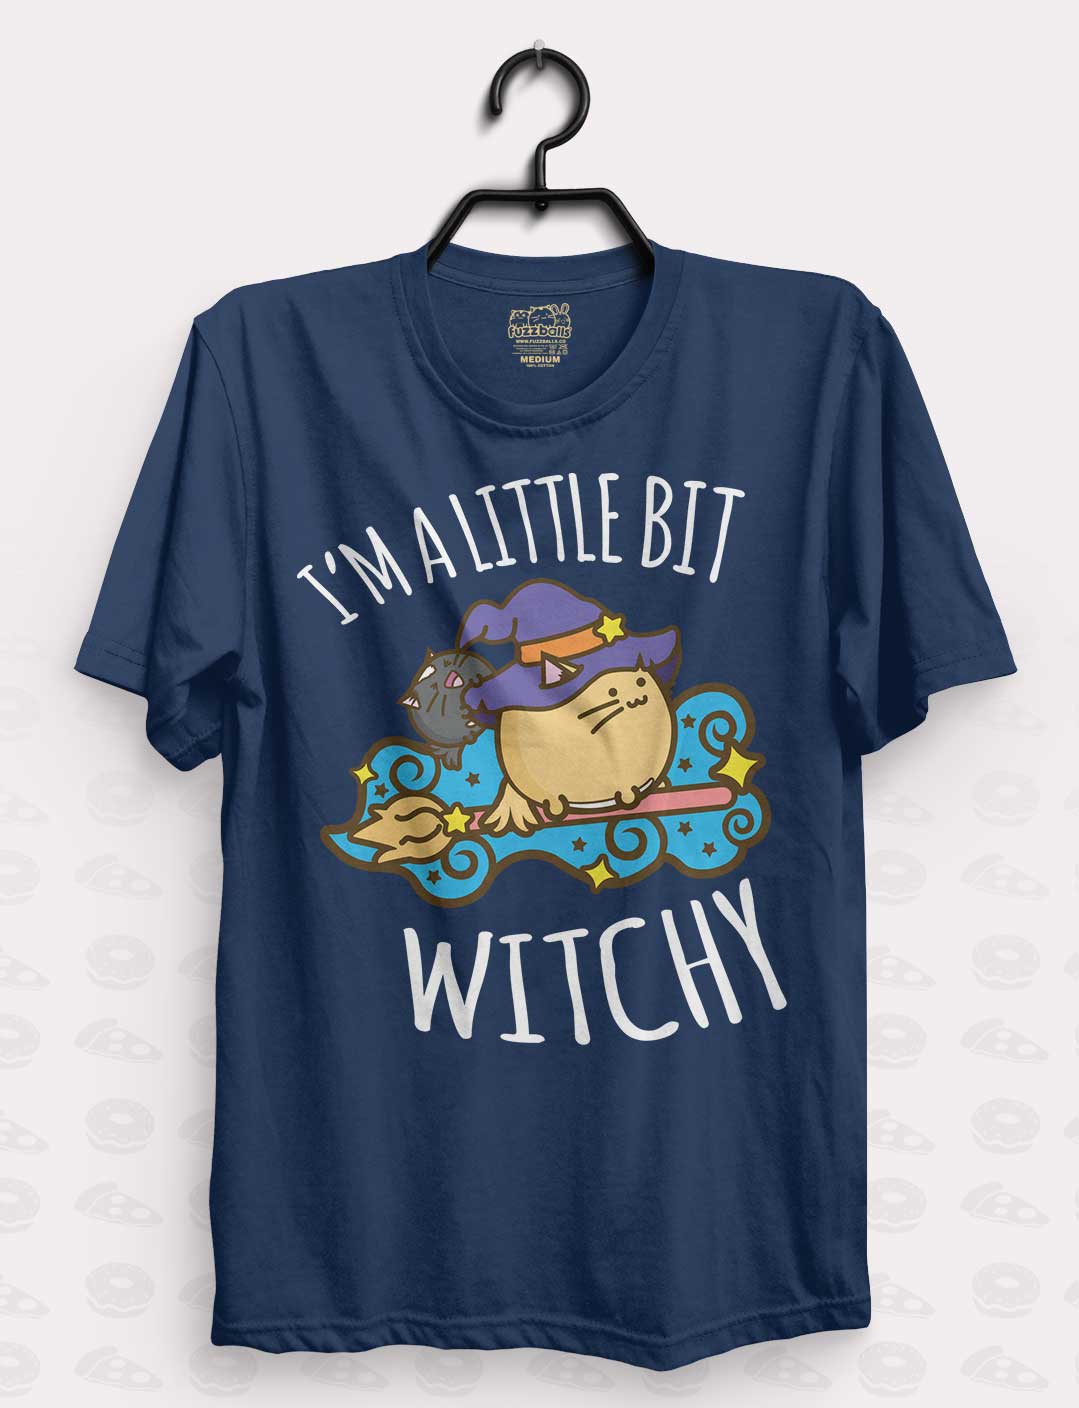 I'm a little bit witchy Shirt